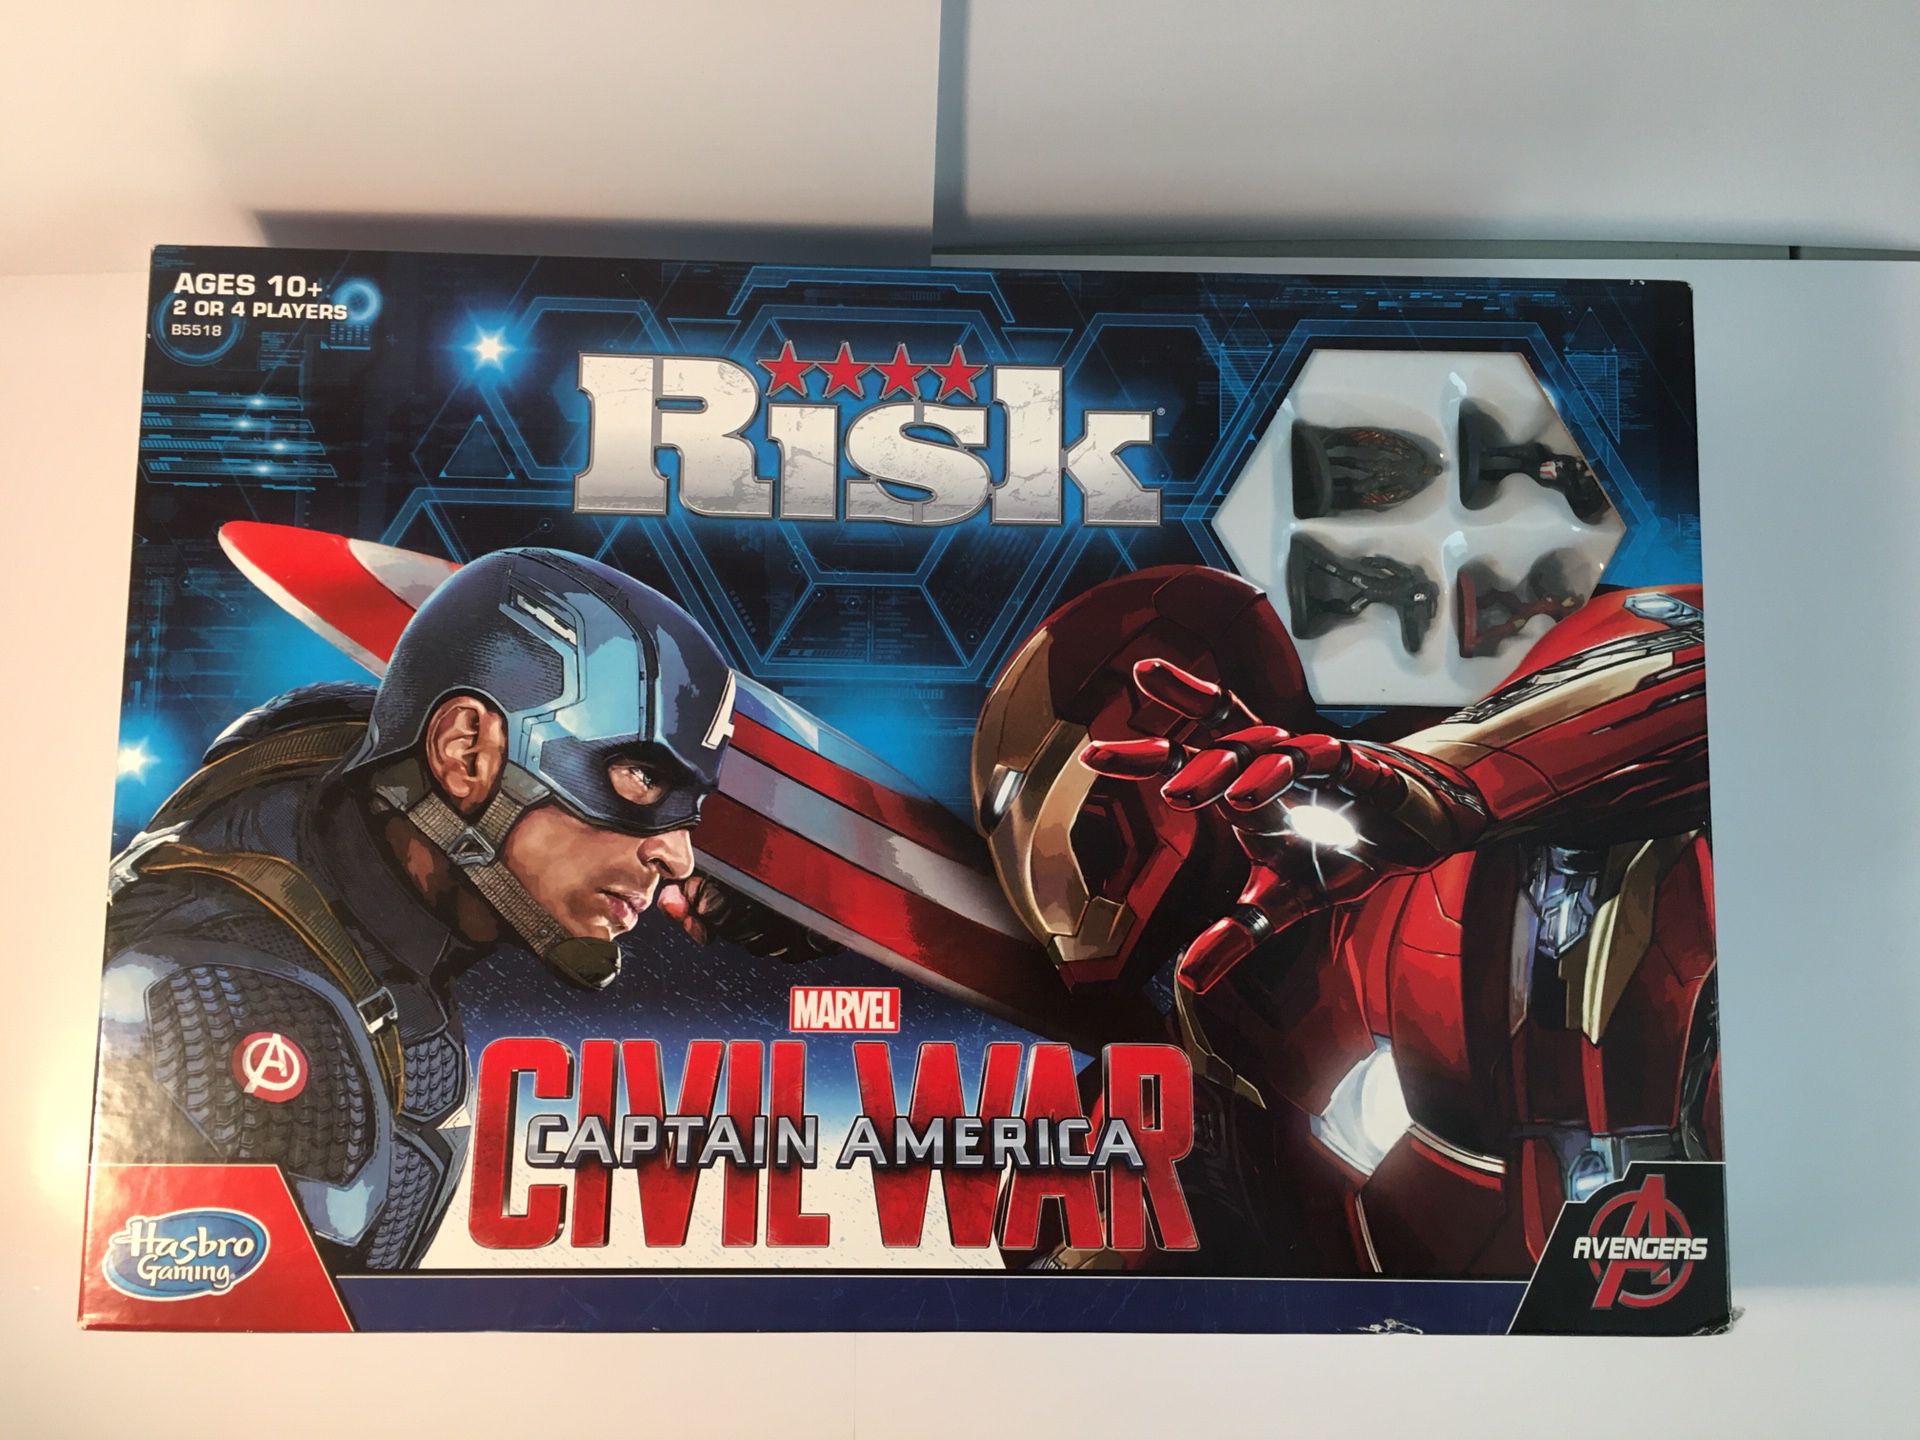 RISK Captain America Civil War Edition. Marvel. Avengers. Hasbro. NEW, OPEN BOX!